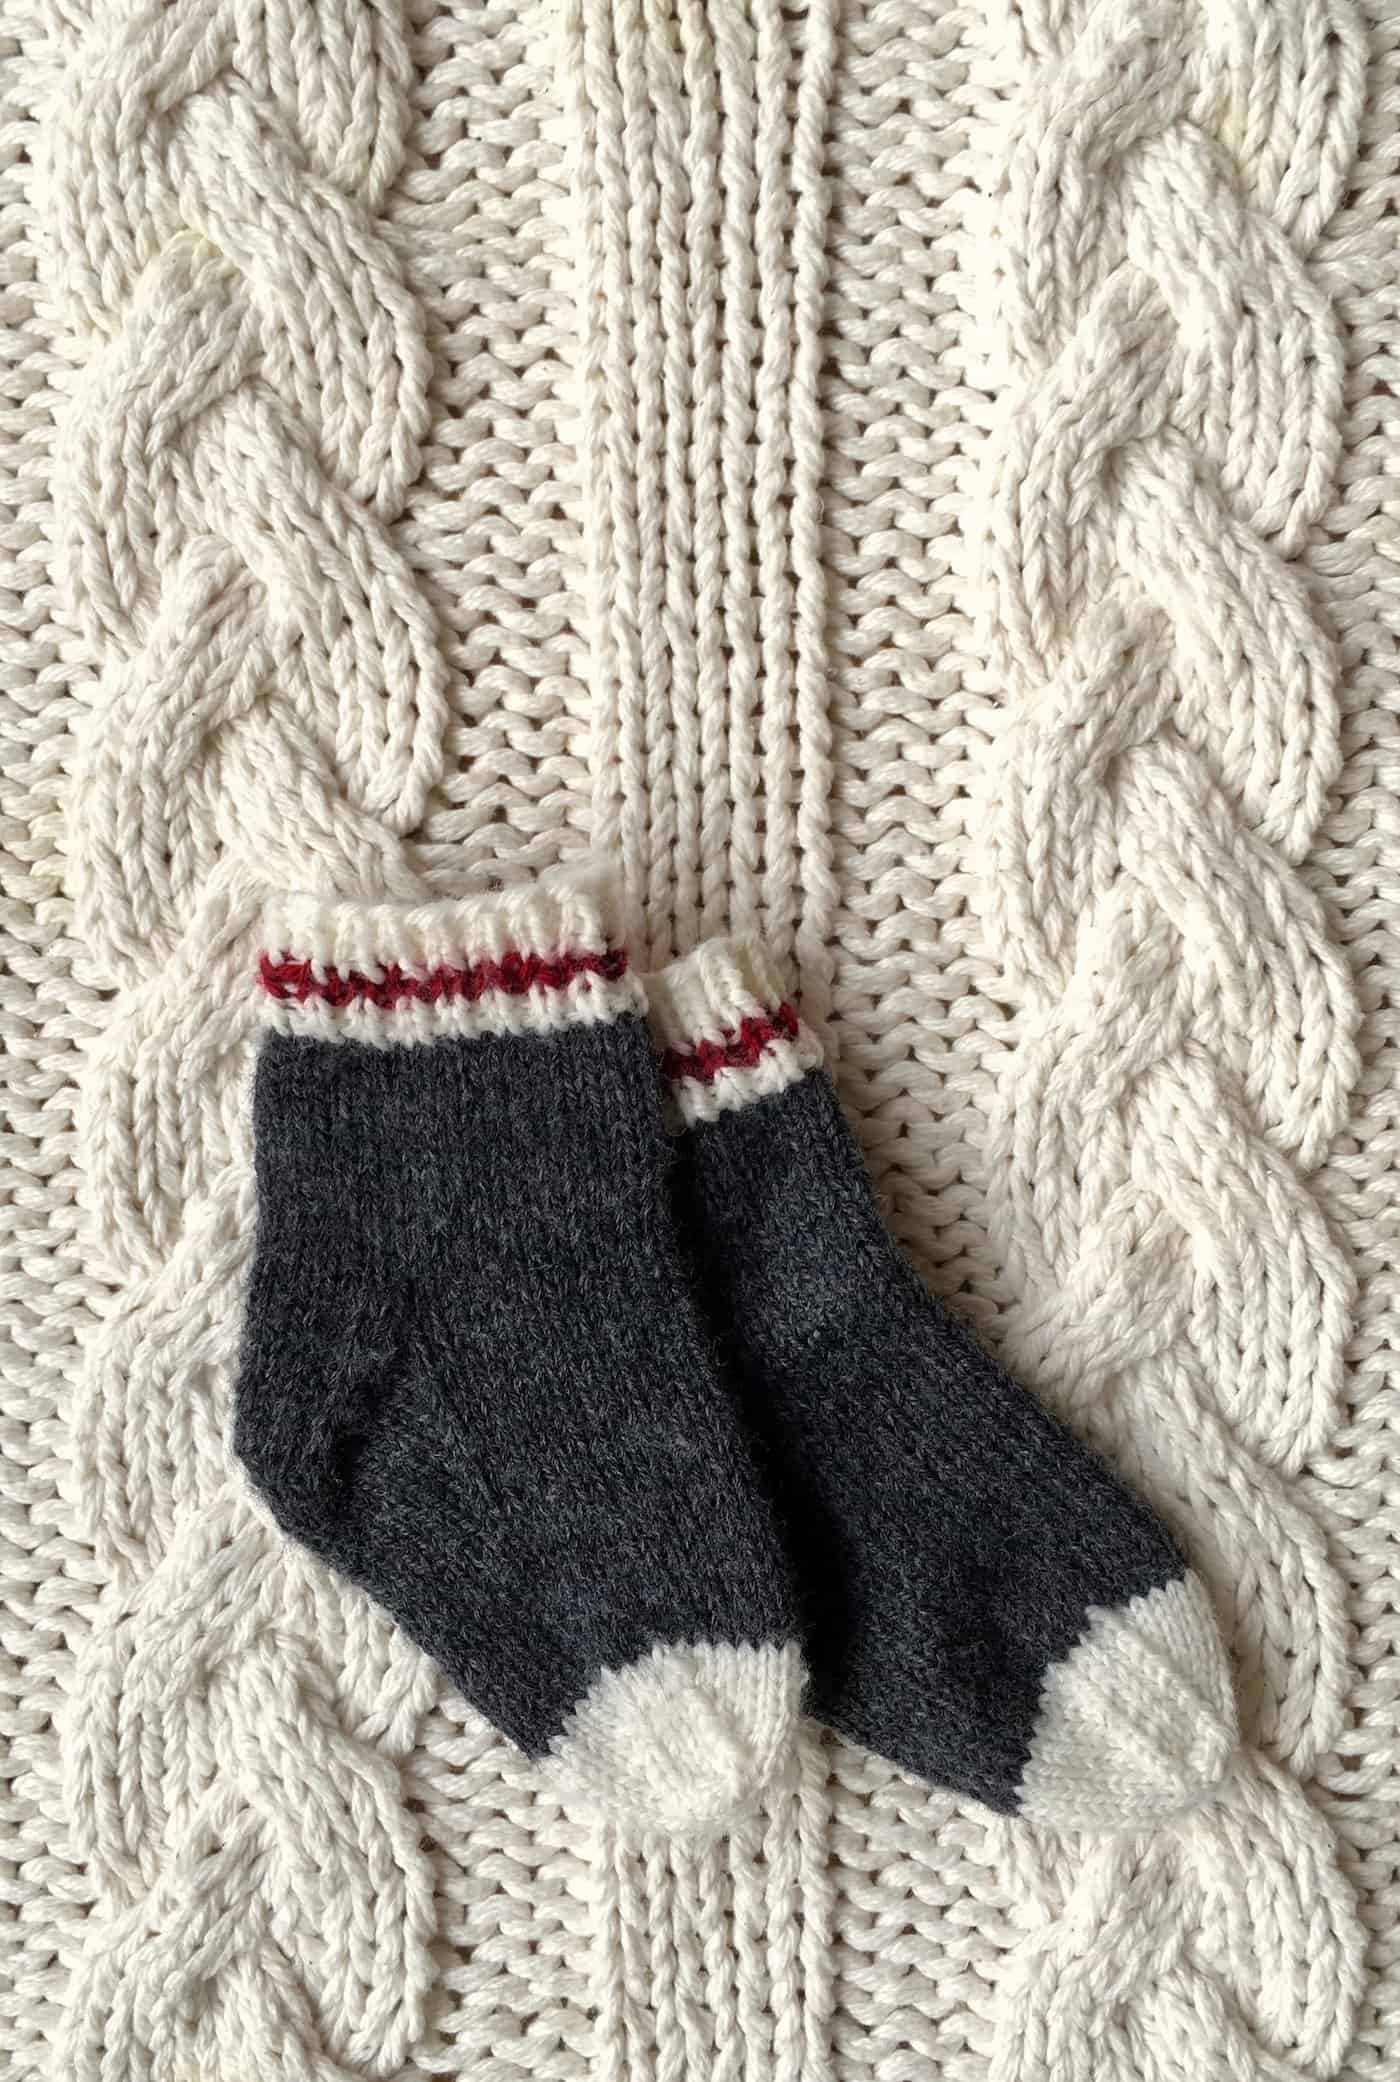 I love these adorable baby socks! They're mini baby work socks just like real lumberjack socks or monkey socks. Super cute! #babysocks #knitting #worksocks #babyworksocks